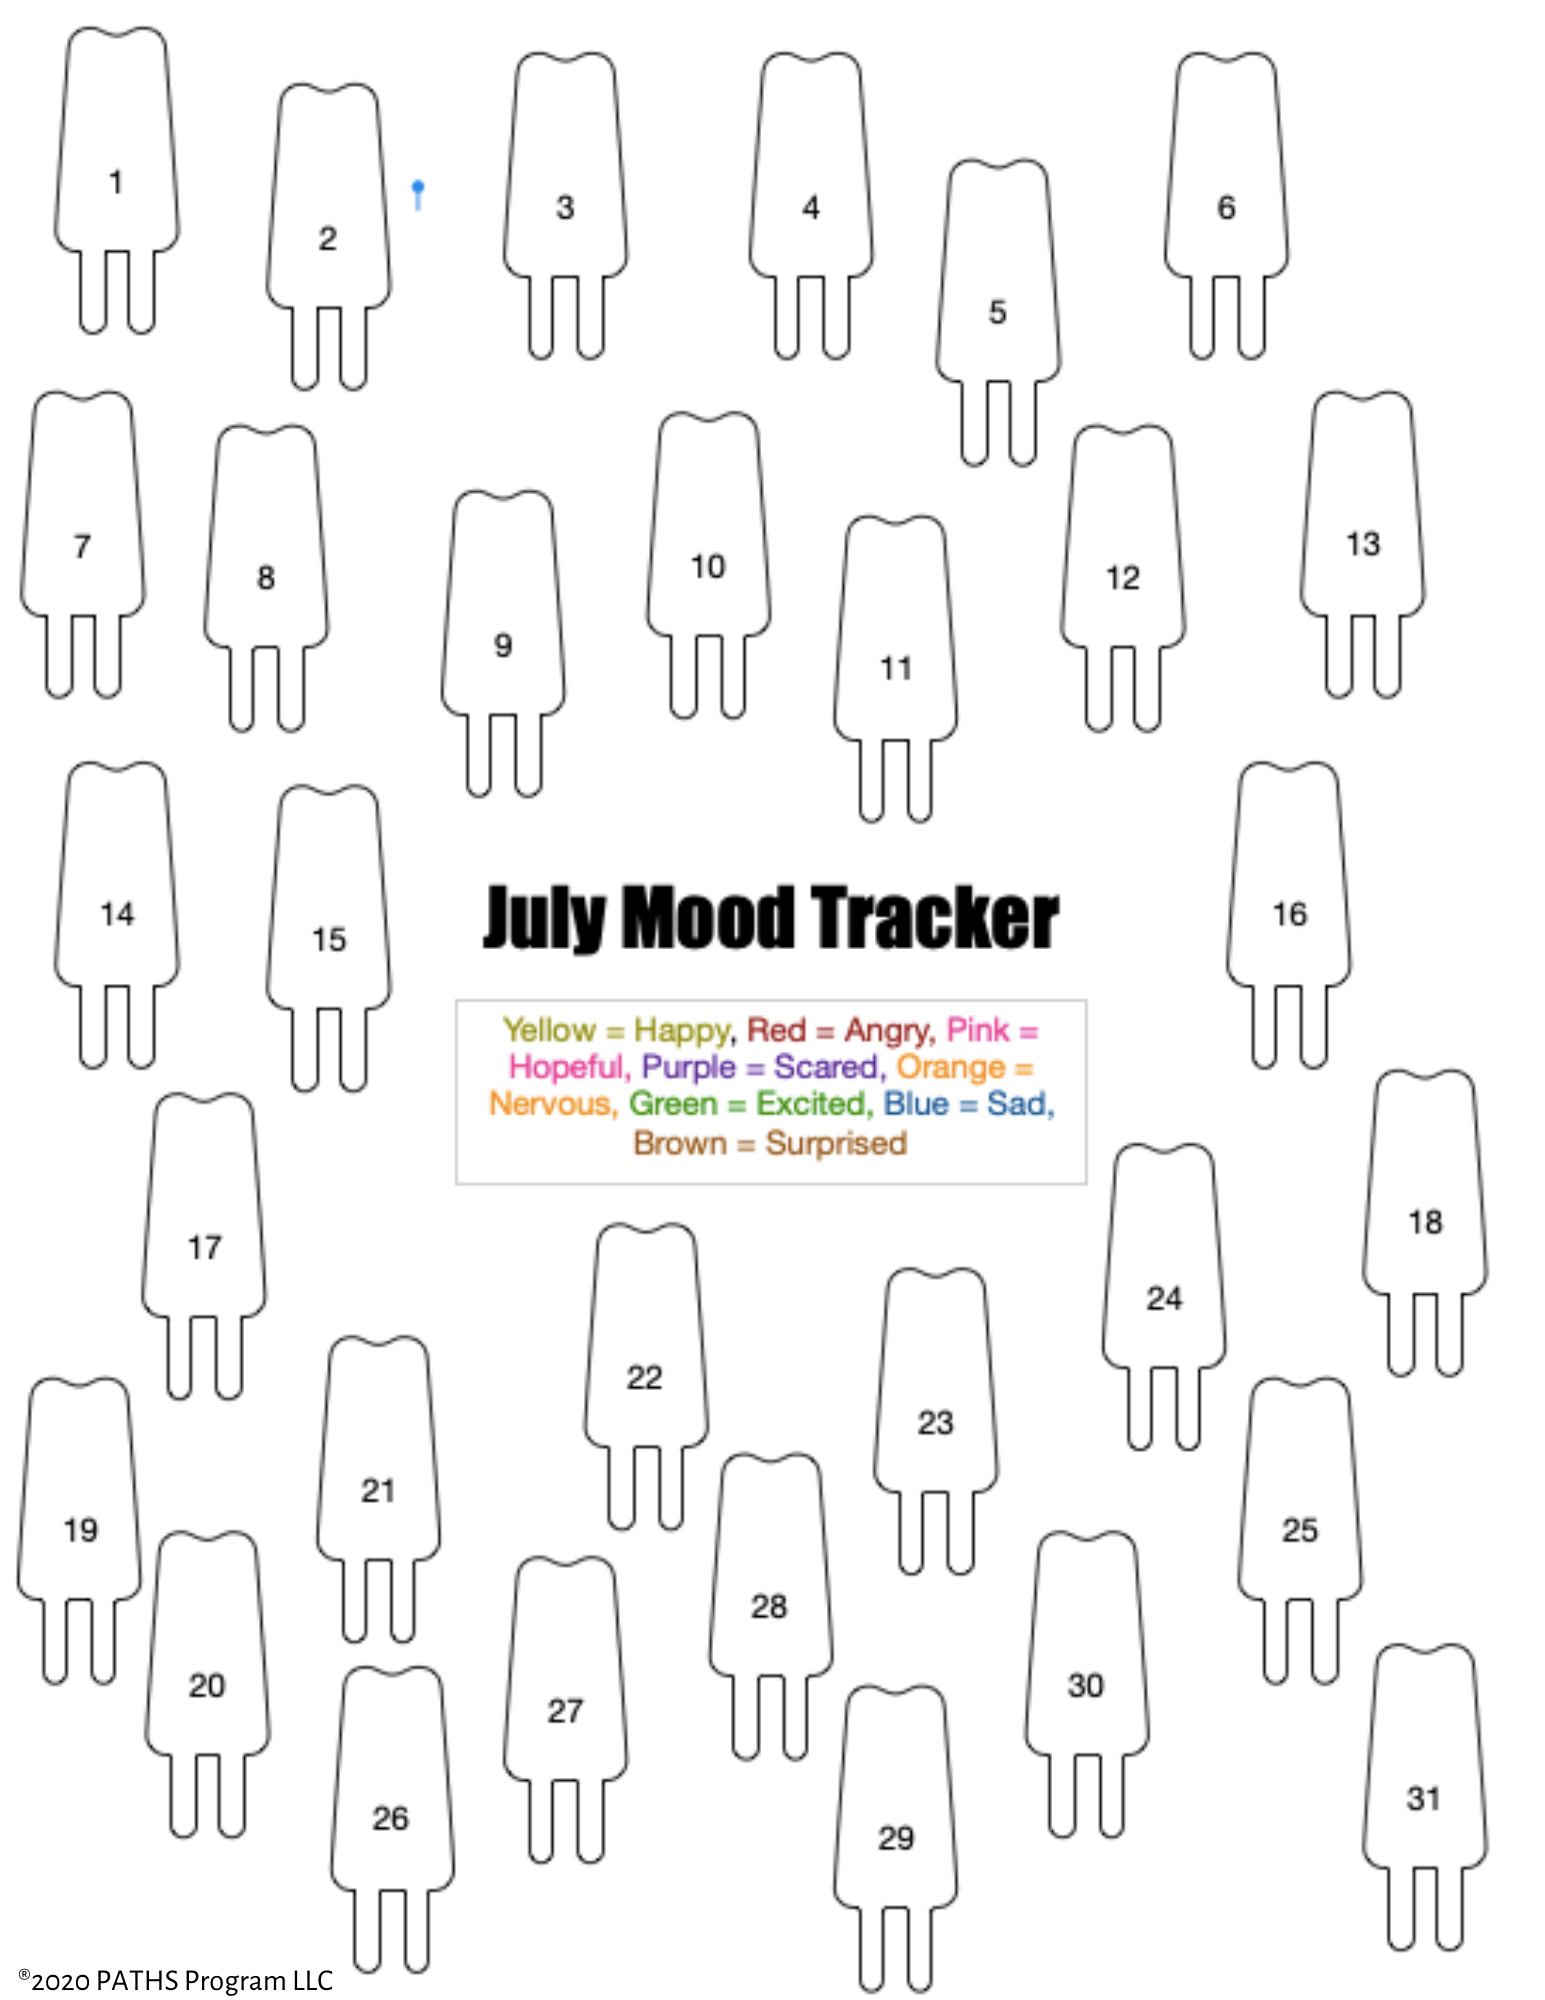 July Mood Tracker PATHS